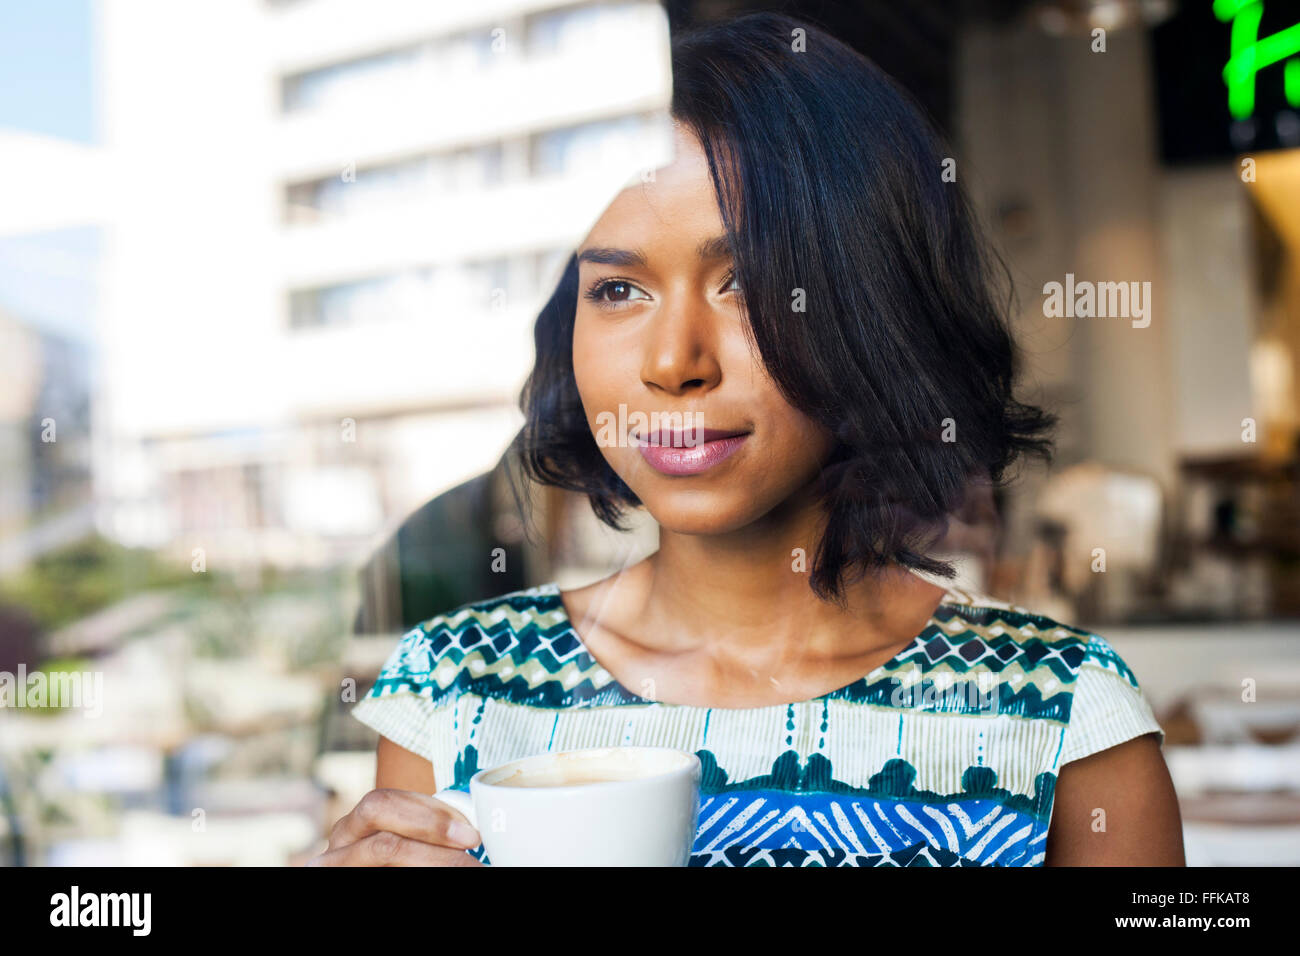 Mixed race woman takes a coffee break Stock Photo